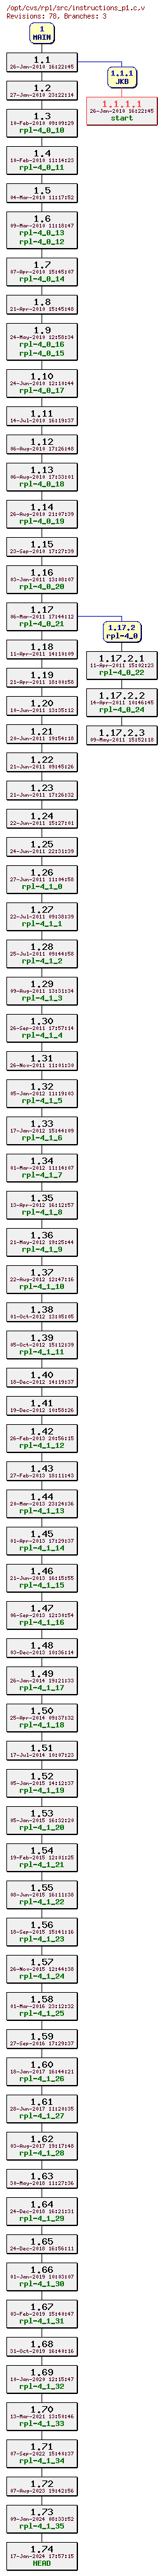 Revision graph of rpl/src/instructions_p1.c